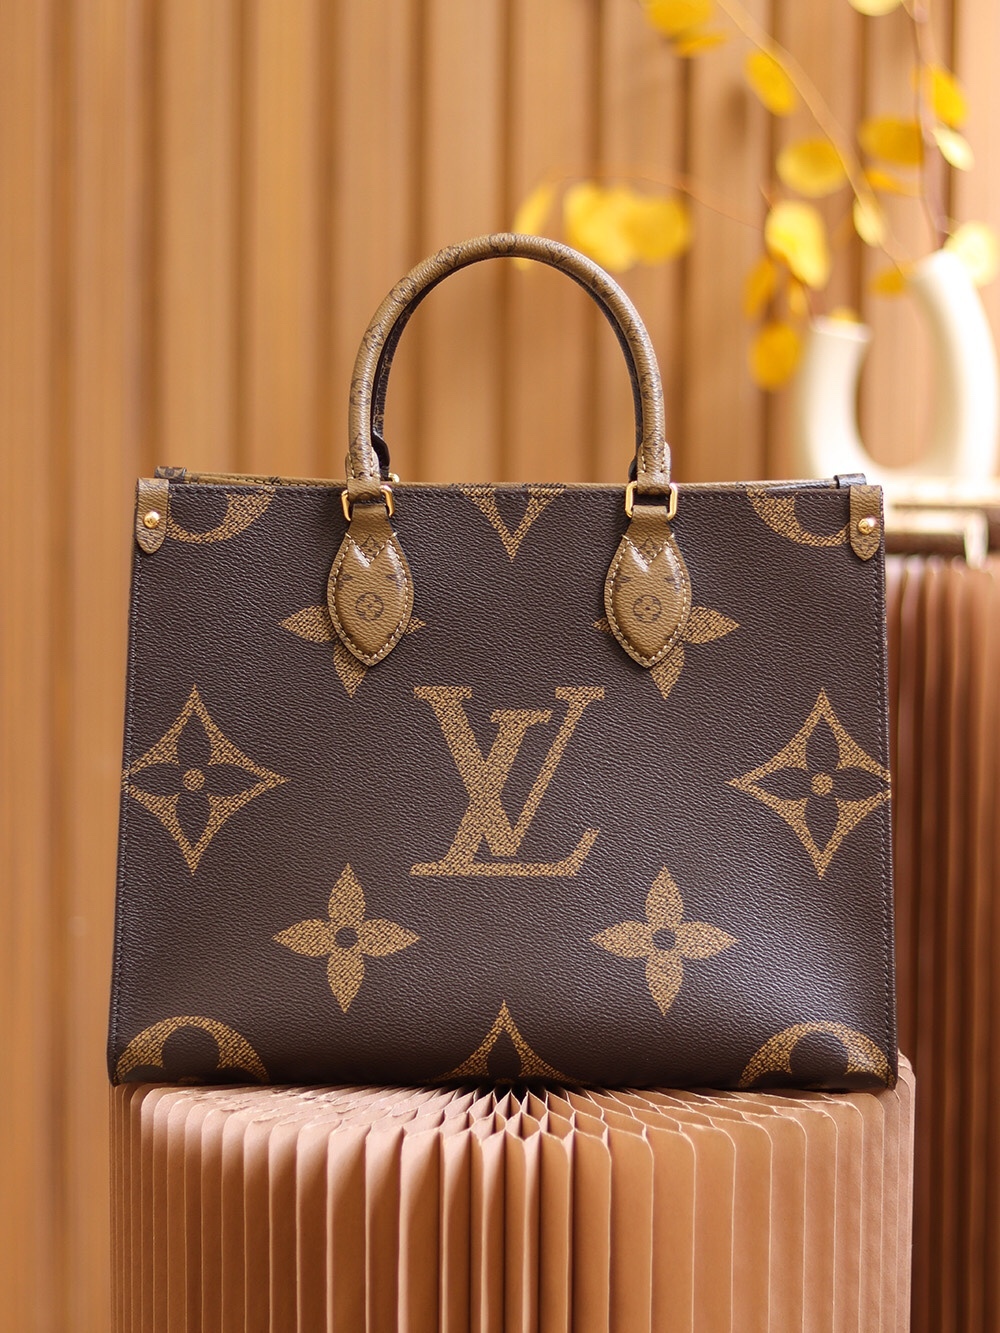 Louis Vuitton - luxuriaworld